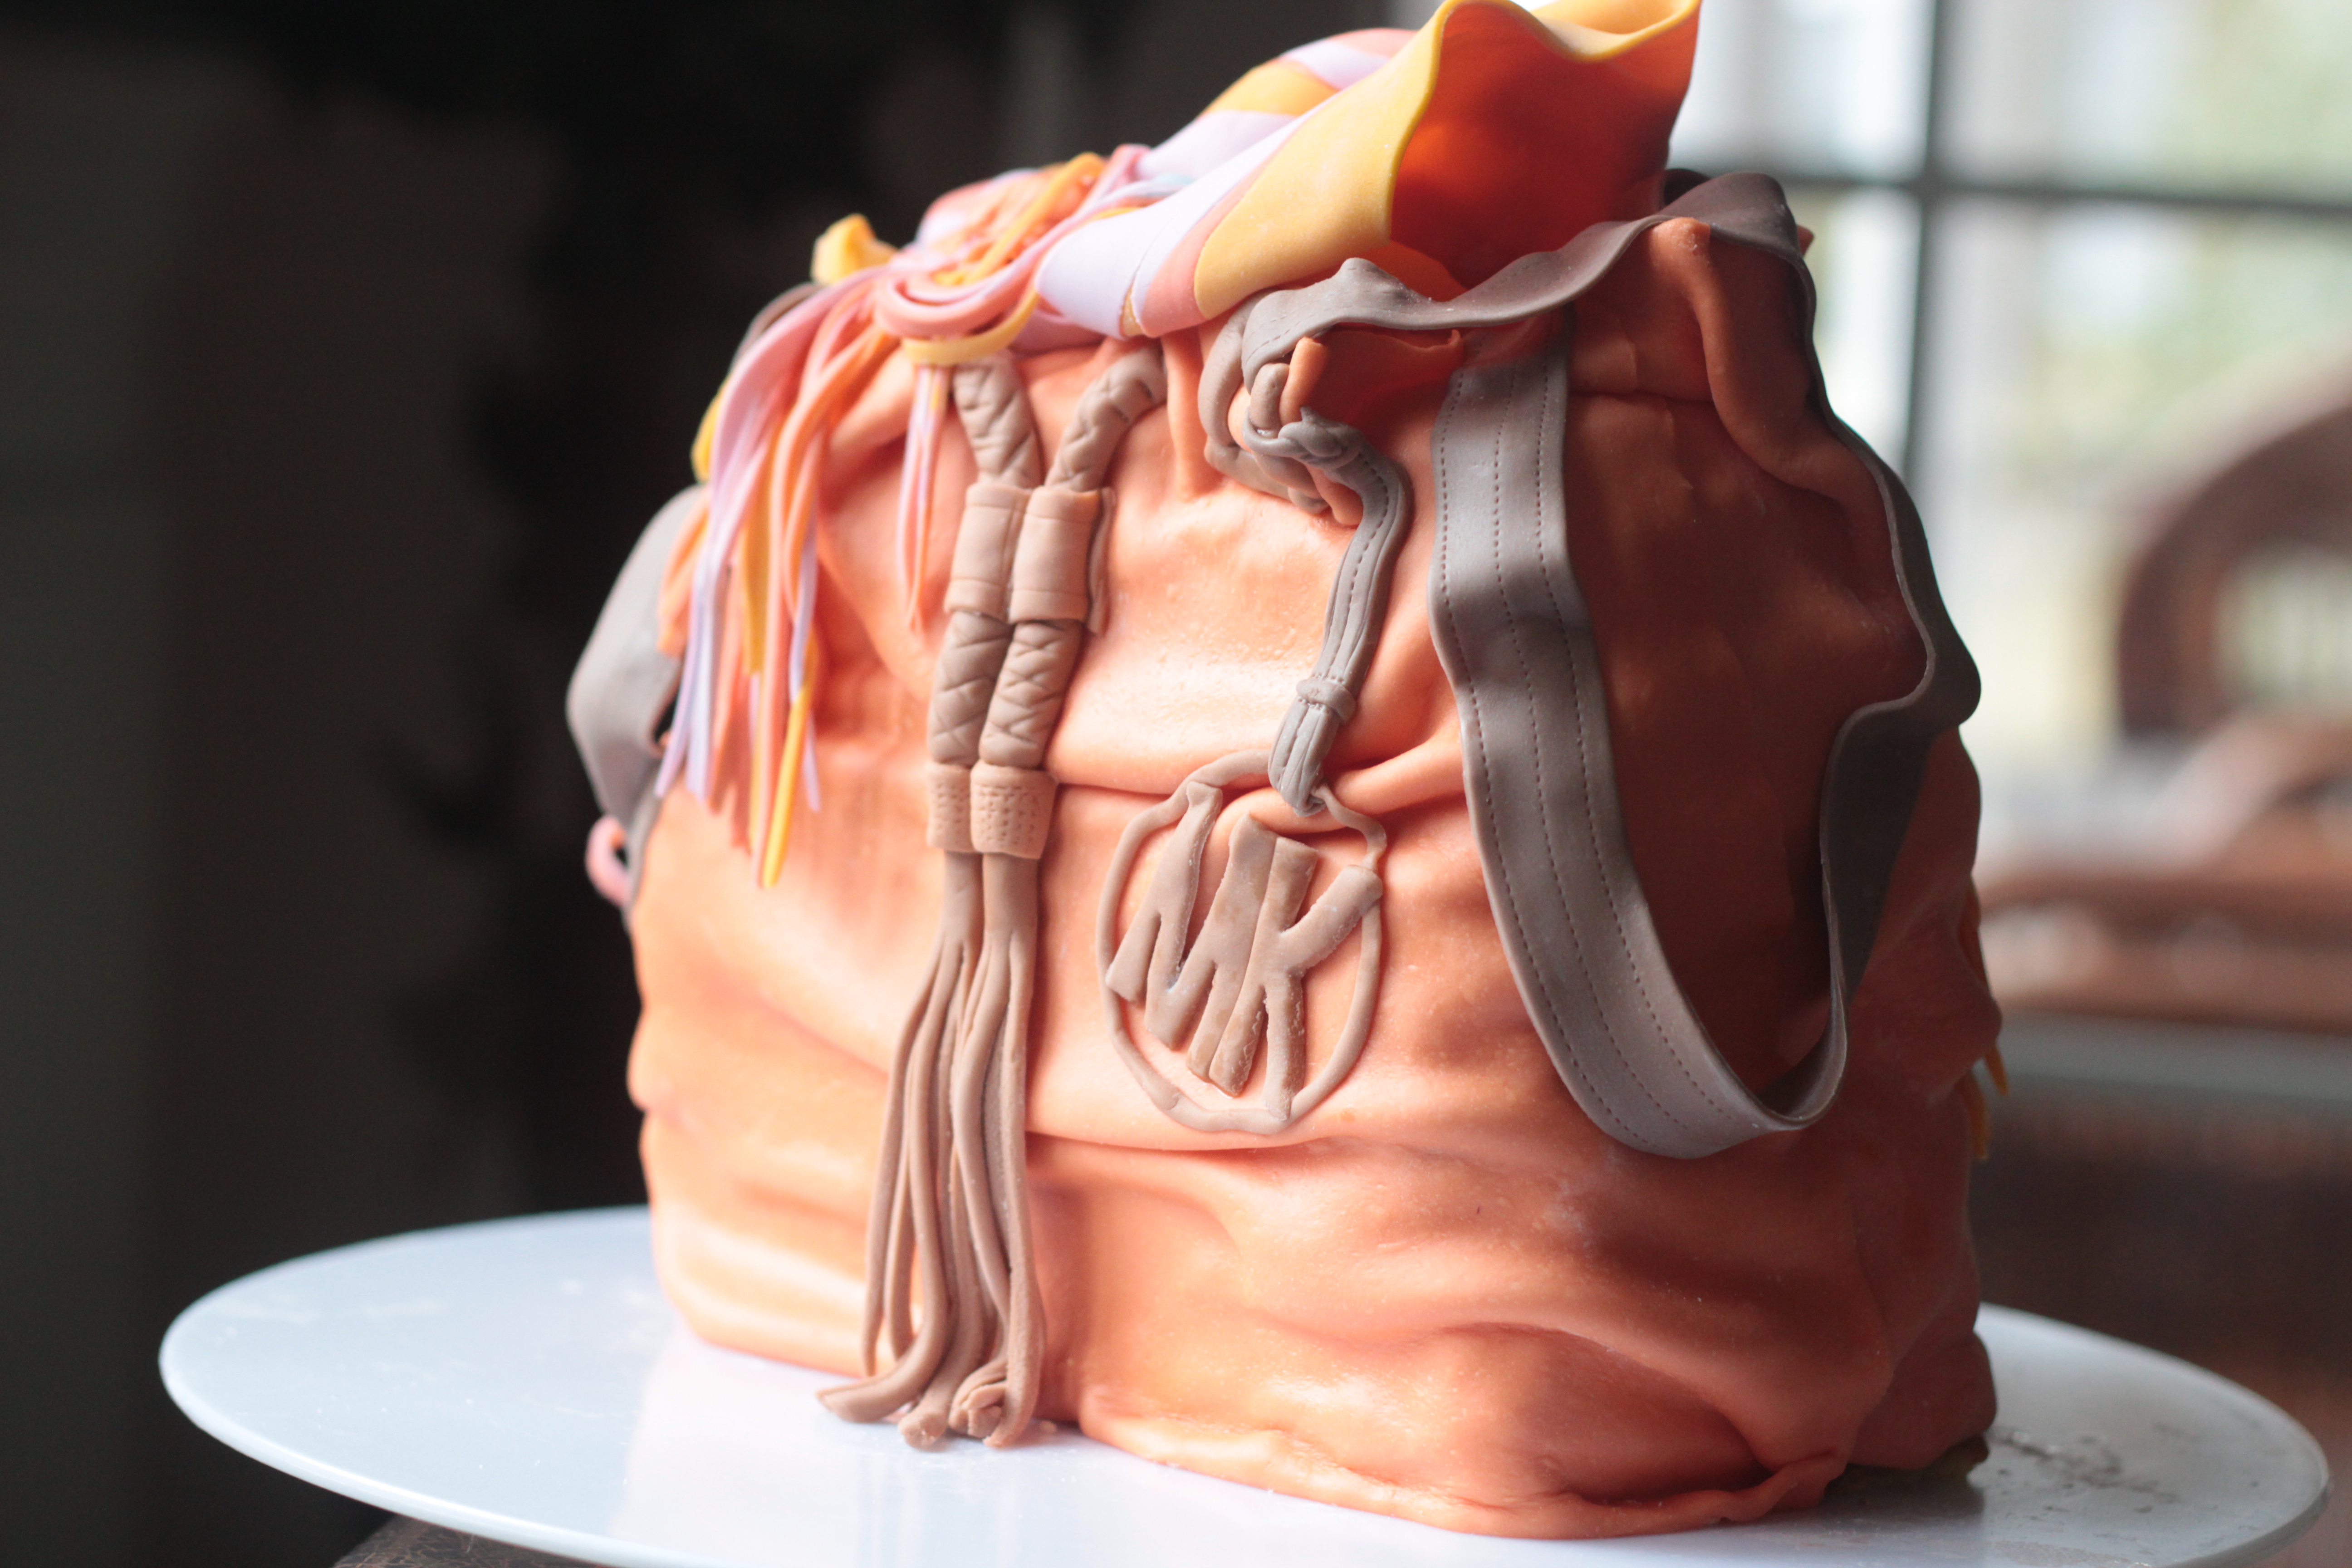 Purse Inspired Birthday Cake Ideas For Women - Crafty Morning